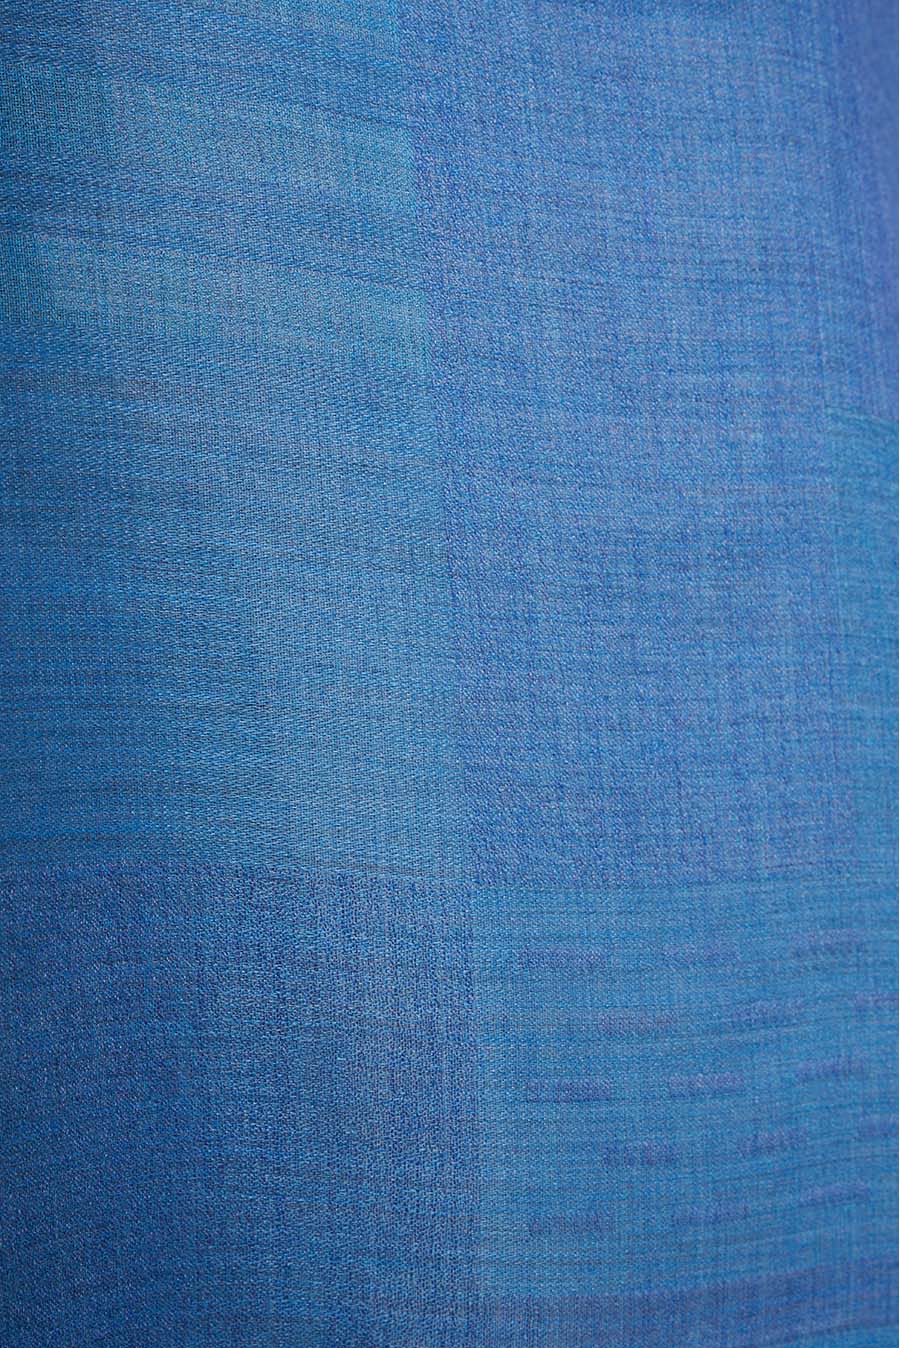 pashmina-estola-incalpaca-671-azul